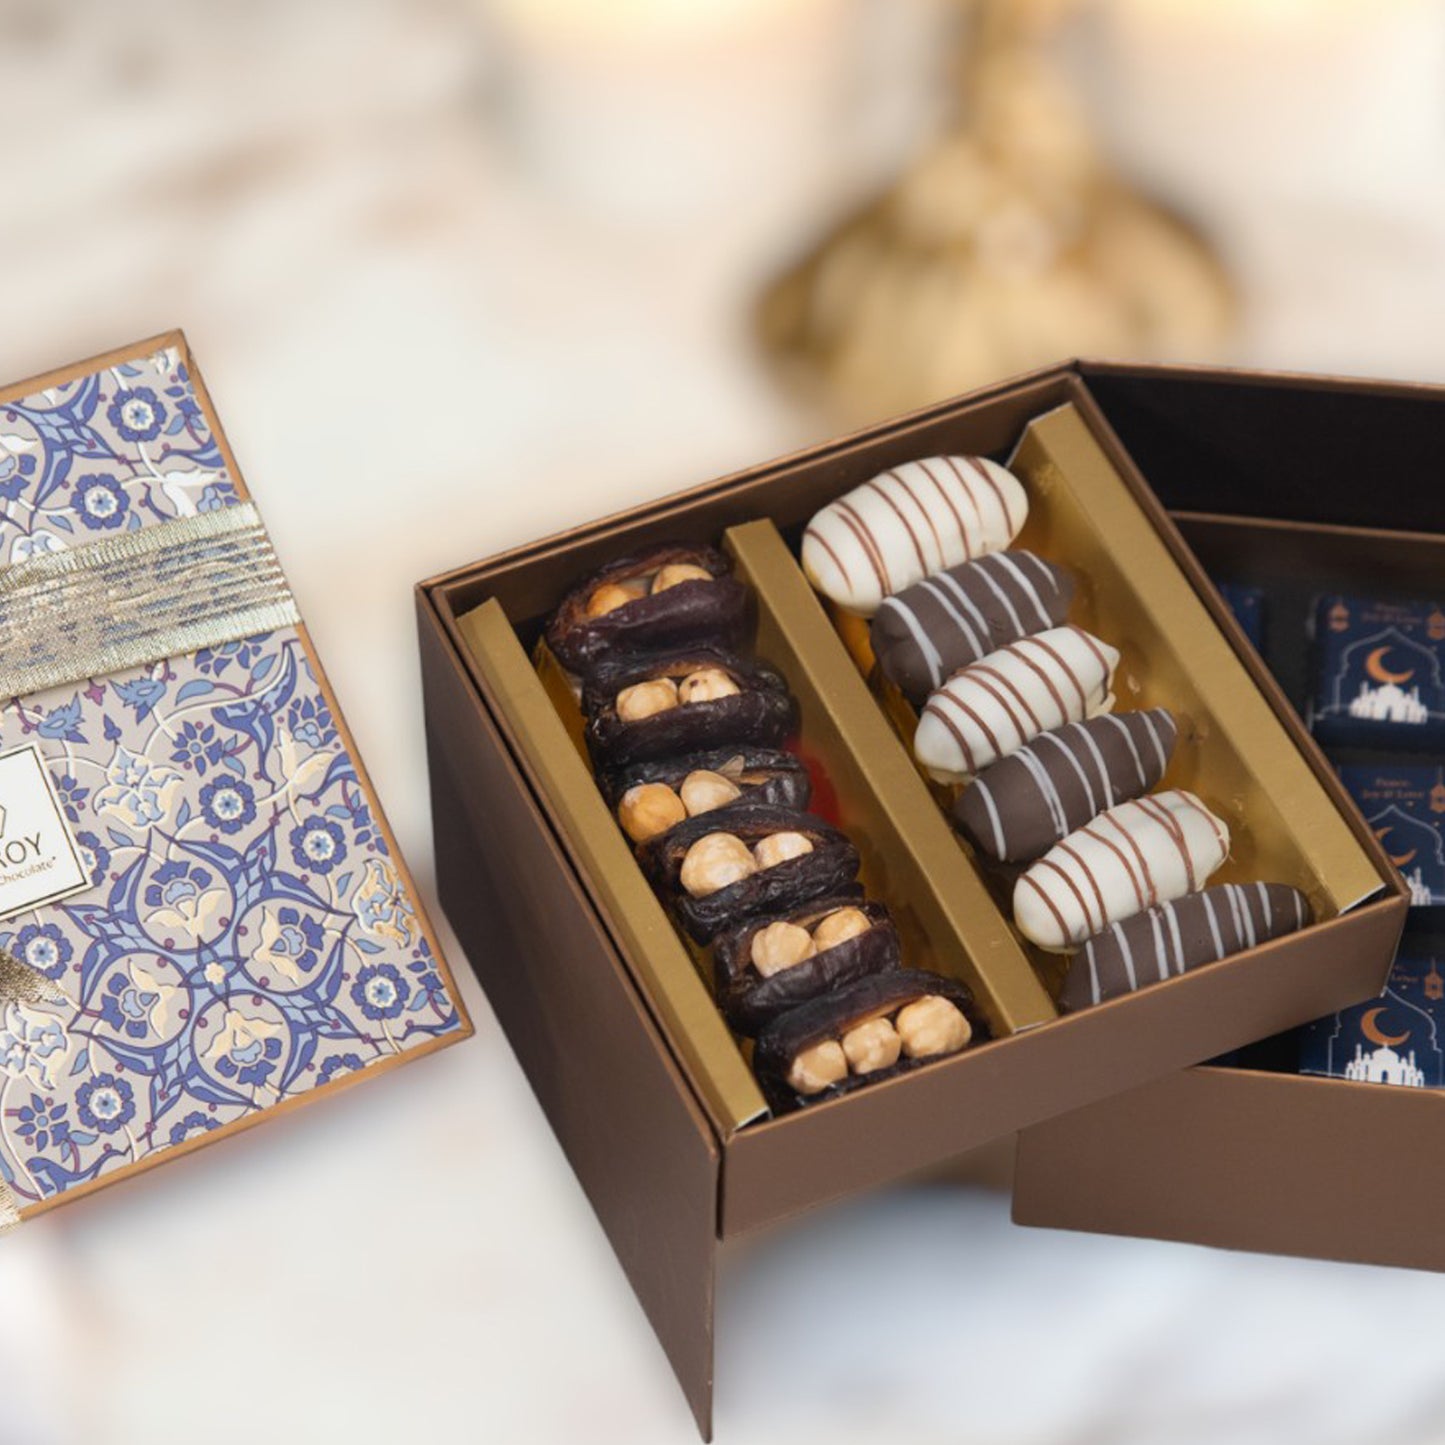 ZOROY Assorted Dry Fruit Filled Dates and  9 Eid Mubarak chocolates 280G in a Double decker box | Filled With Roasted Almonds, Roasted Hazelnut, Chocolate coated | Khajur dry fruit